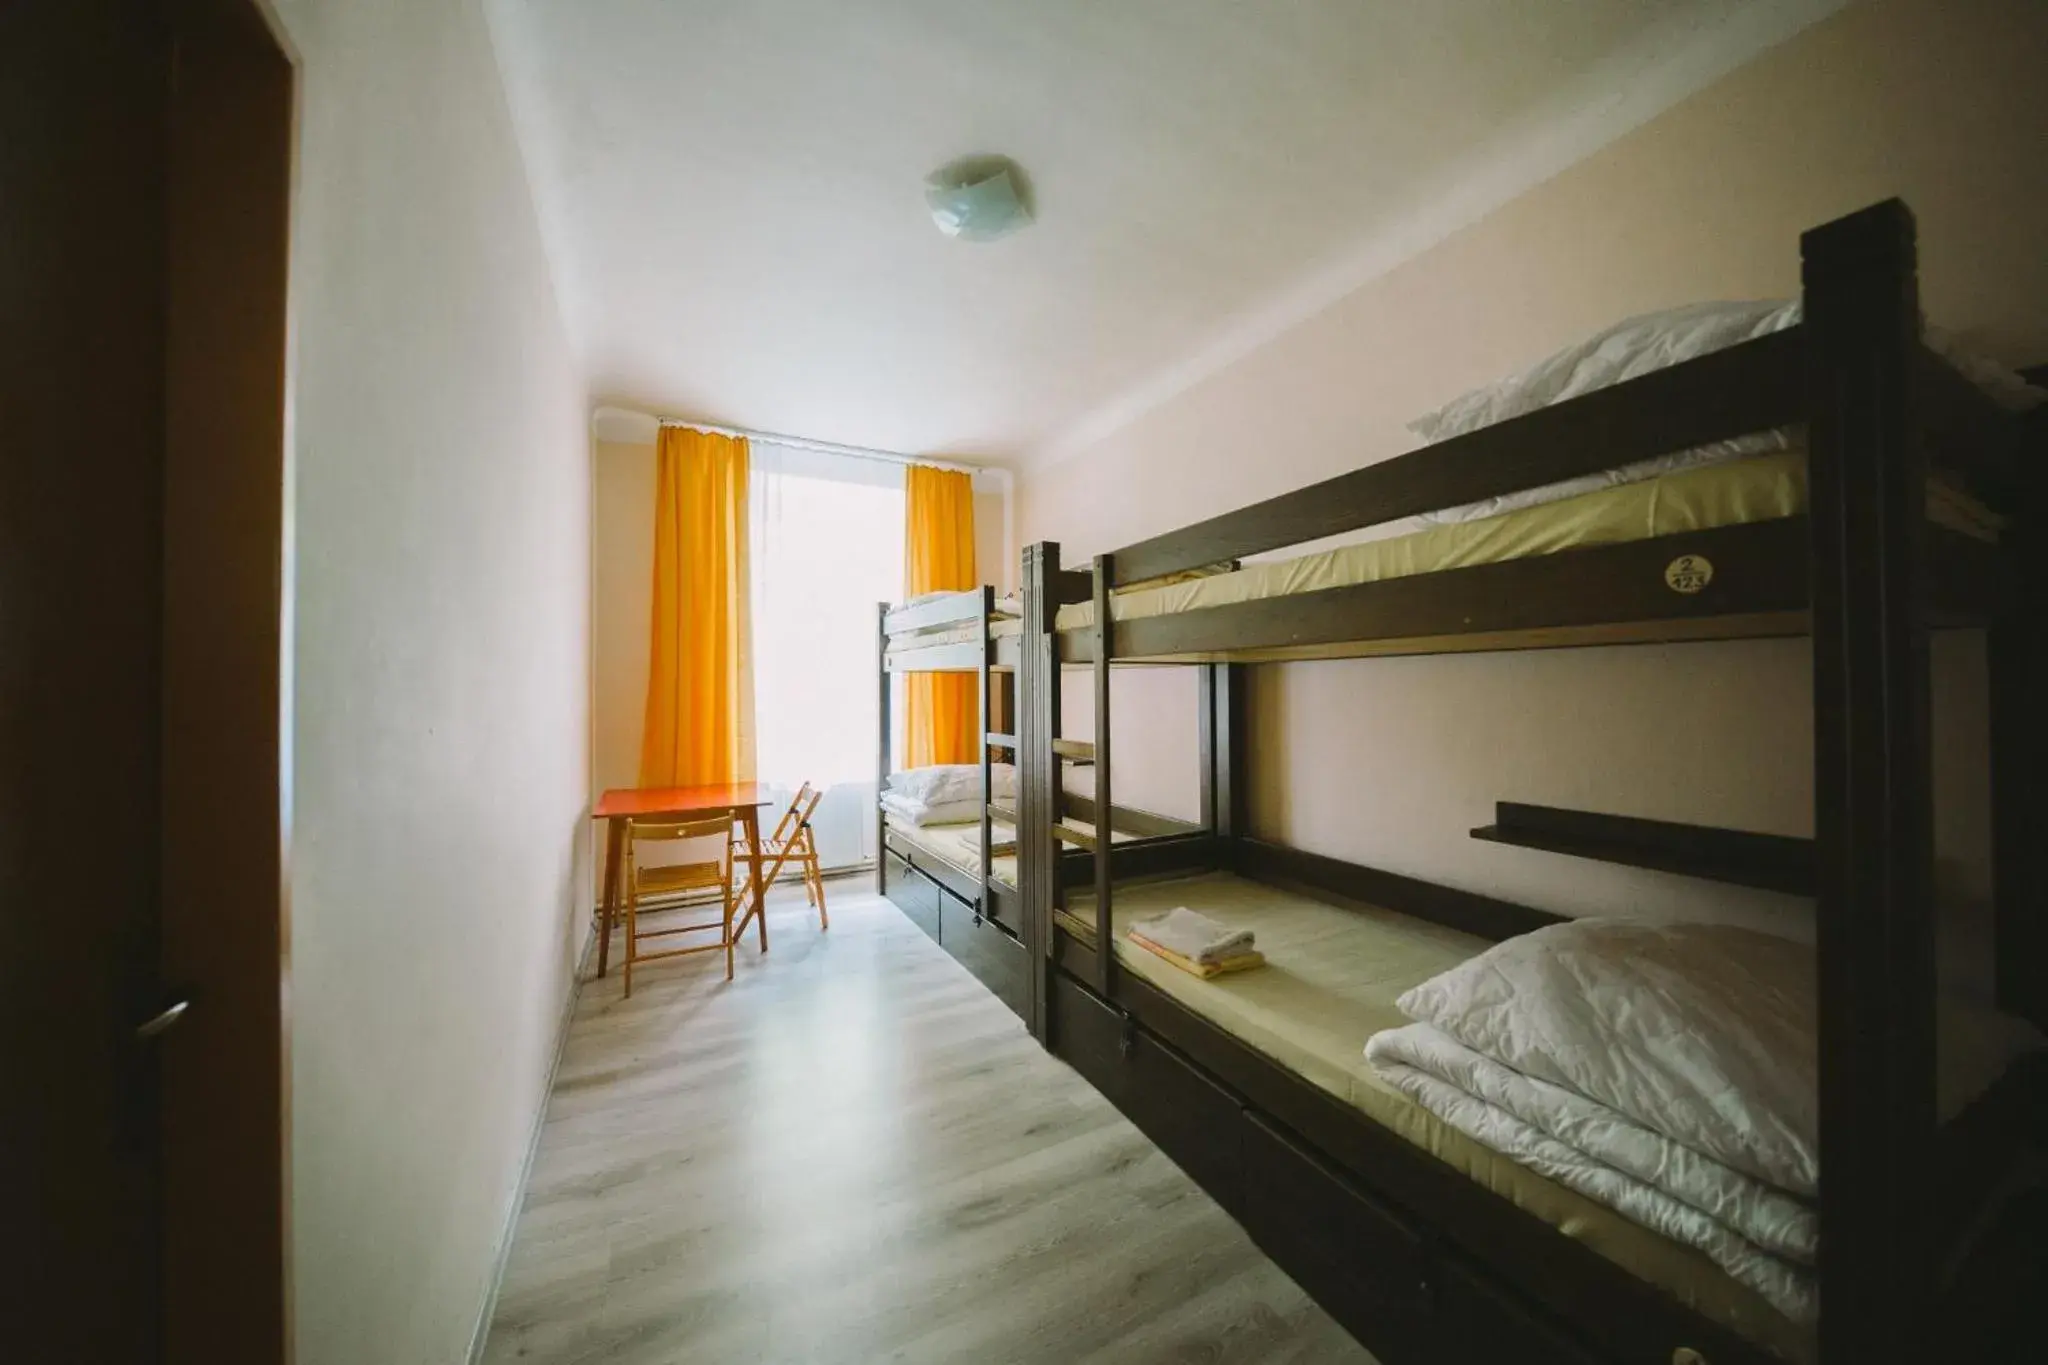 Bed in 4-Bed Male Dormitory Room in Hostel Dakura